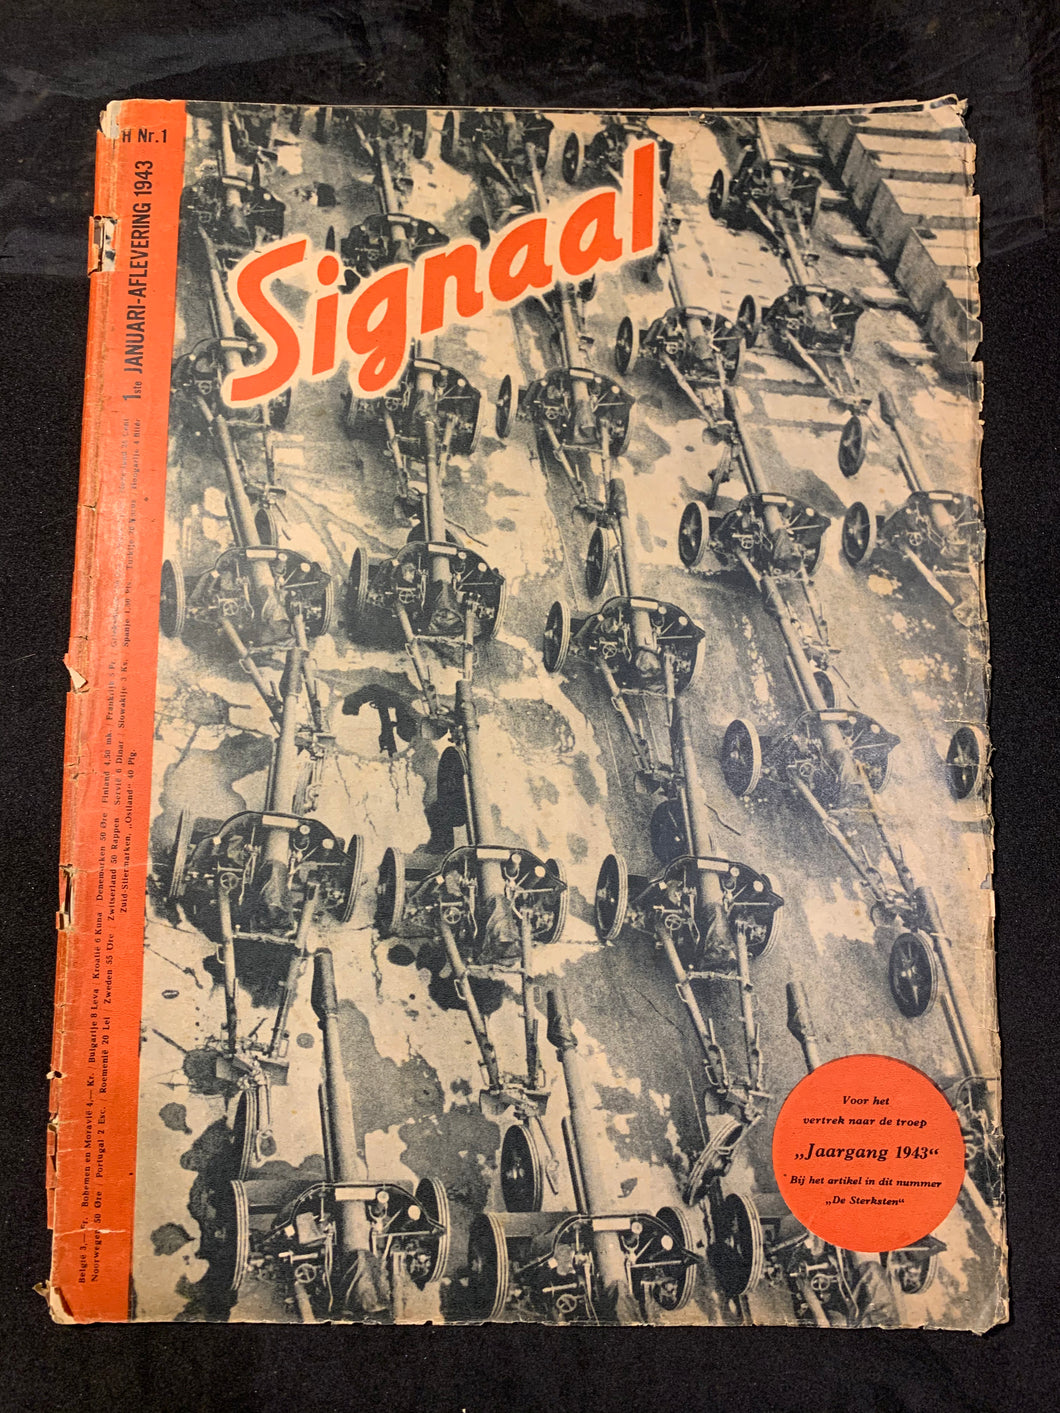 Signaal Magazine Original WW2 German - 1st January 1943 - #91